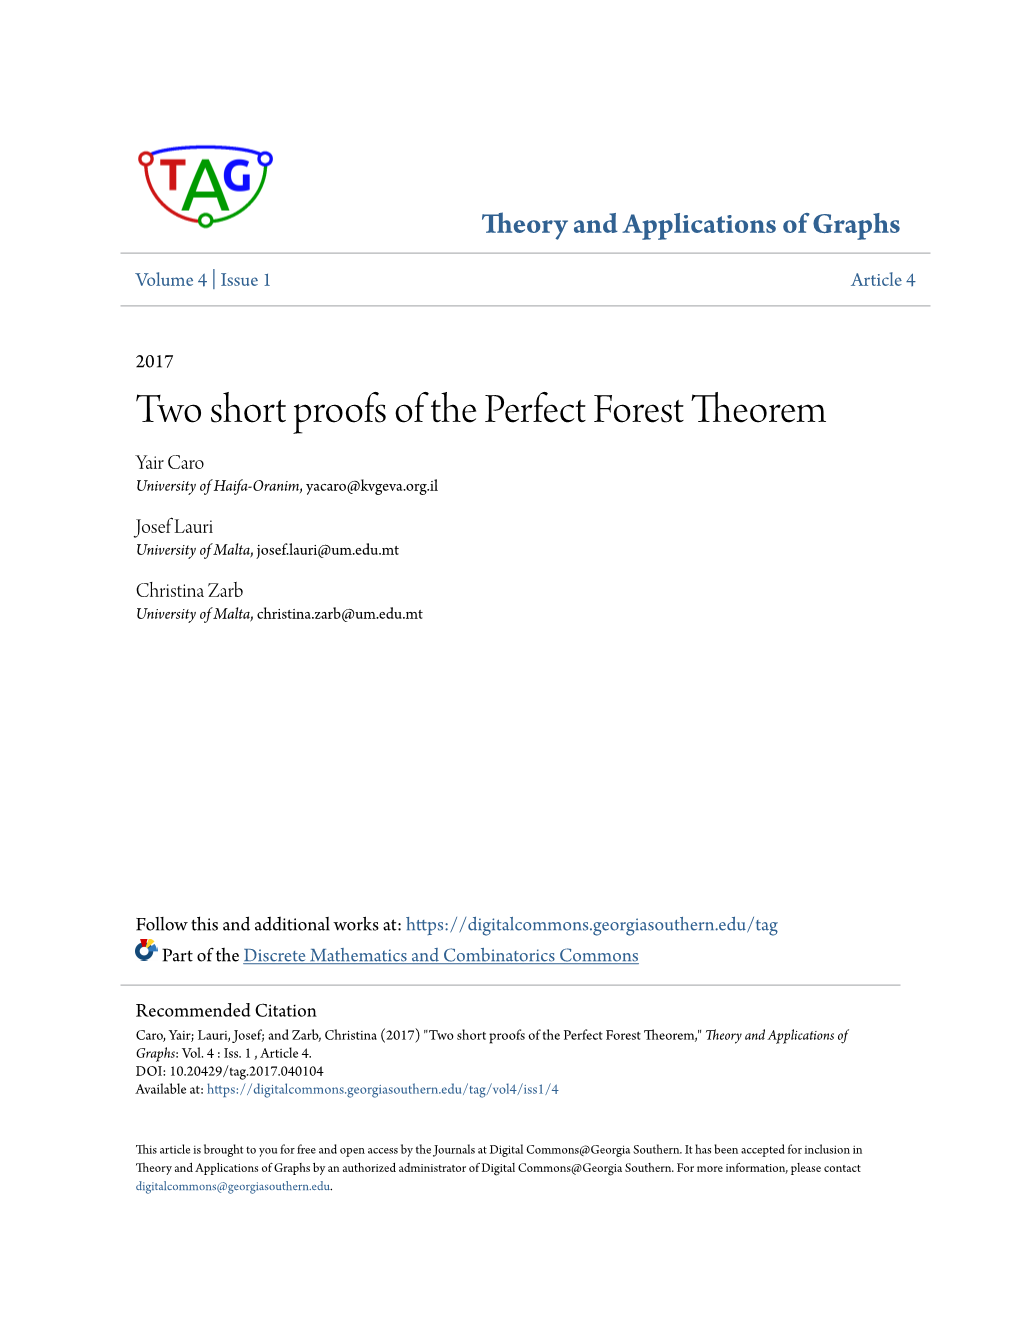 Two Short Proofs of the Perfect Forest Theorem Yair Caro University of Haifa-Oranim, Yacaro@Kvgeva.Org.Il